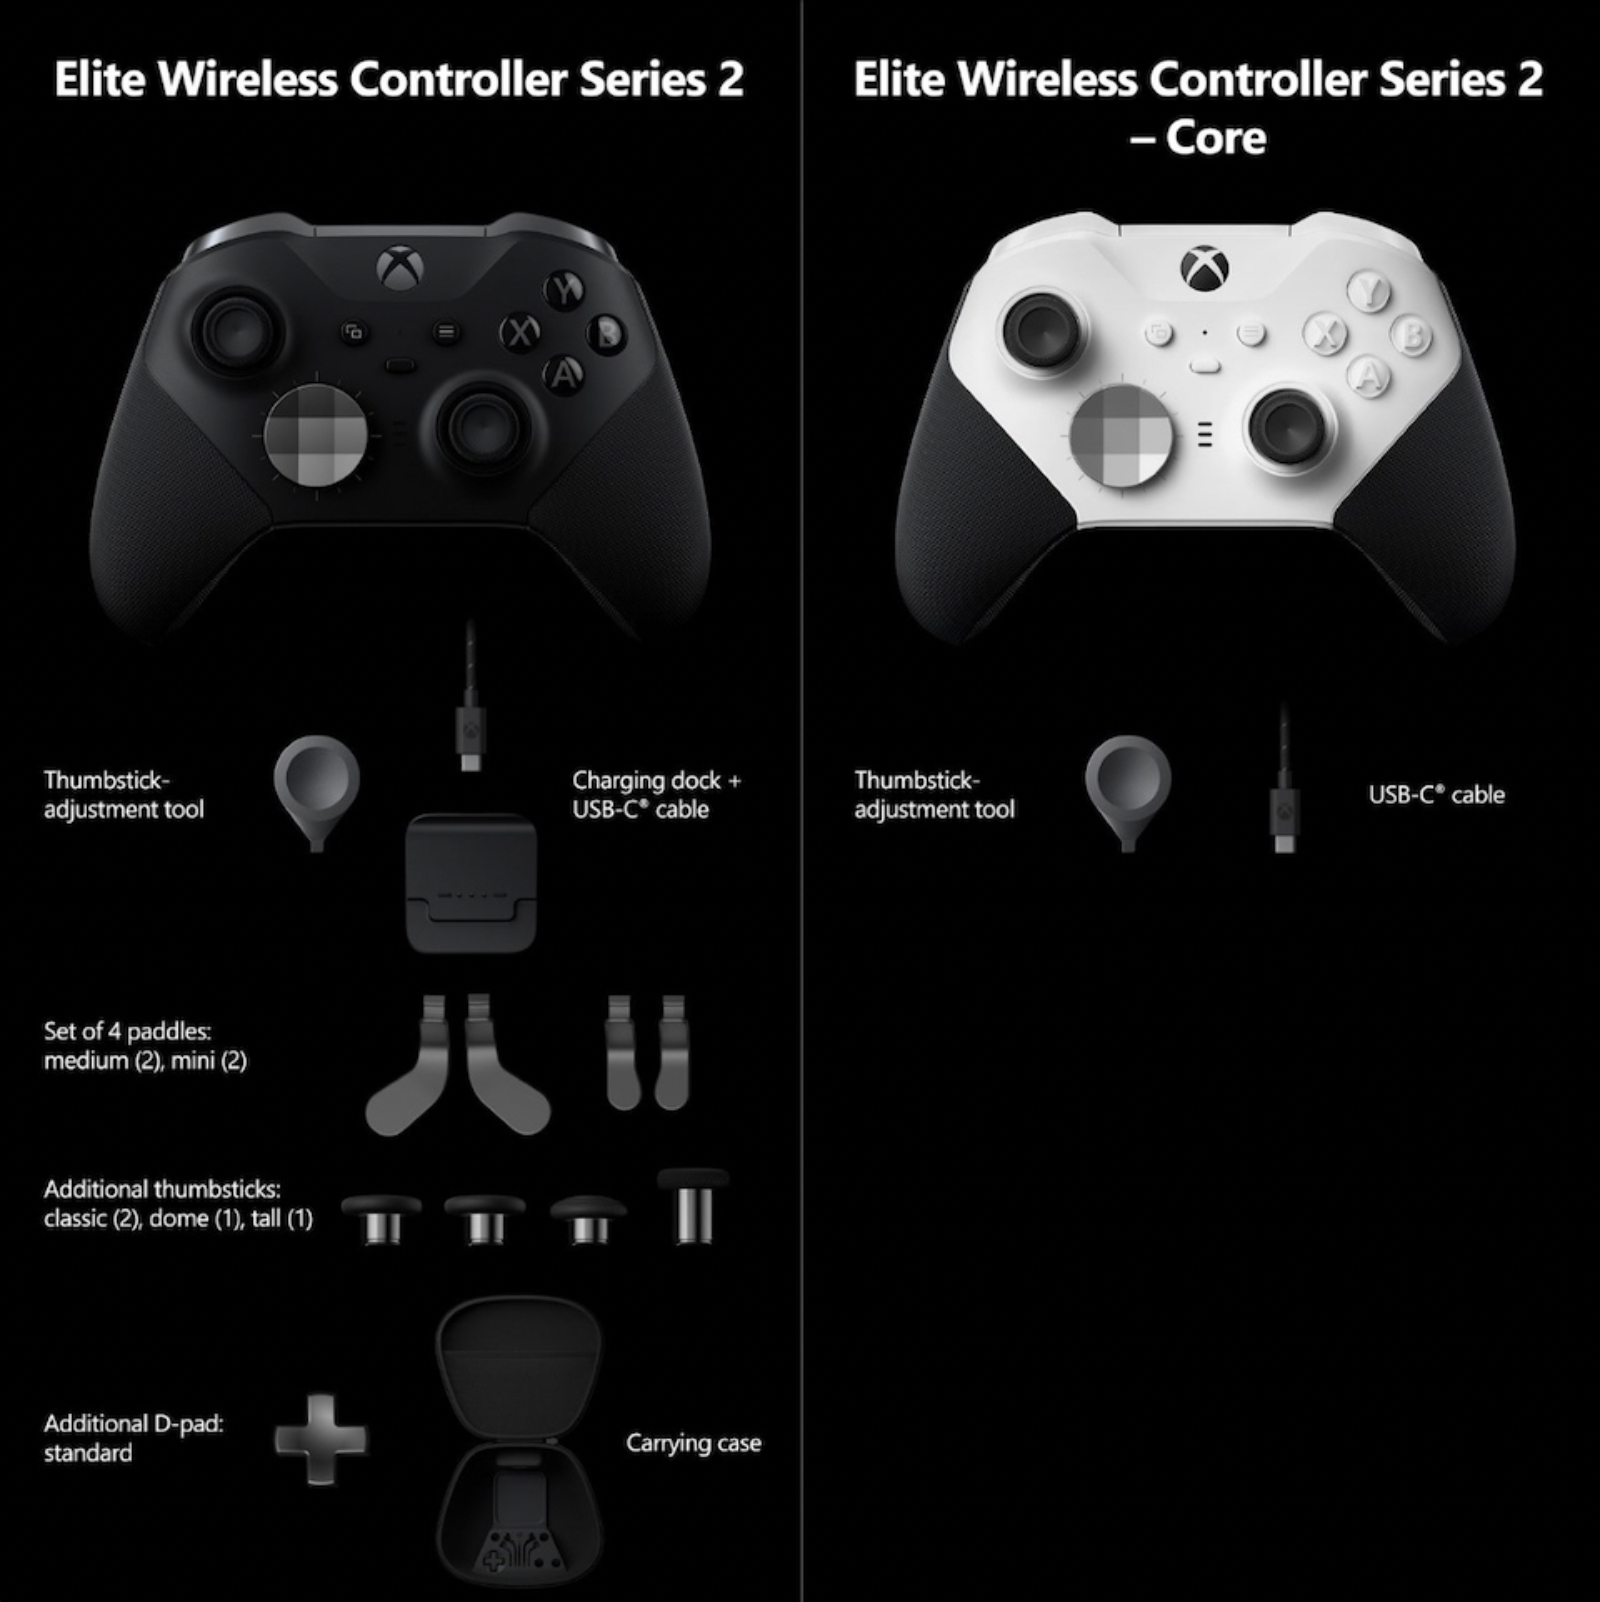  Microsoft Xbox One Elite Wireless Controller Version 1 : Video  Games